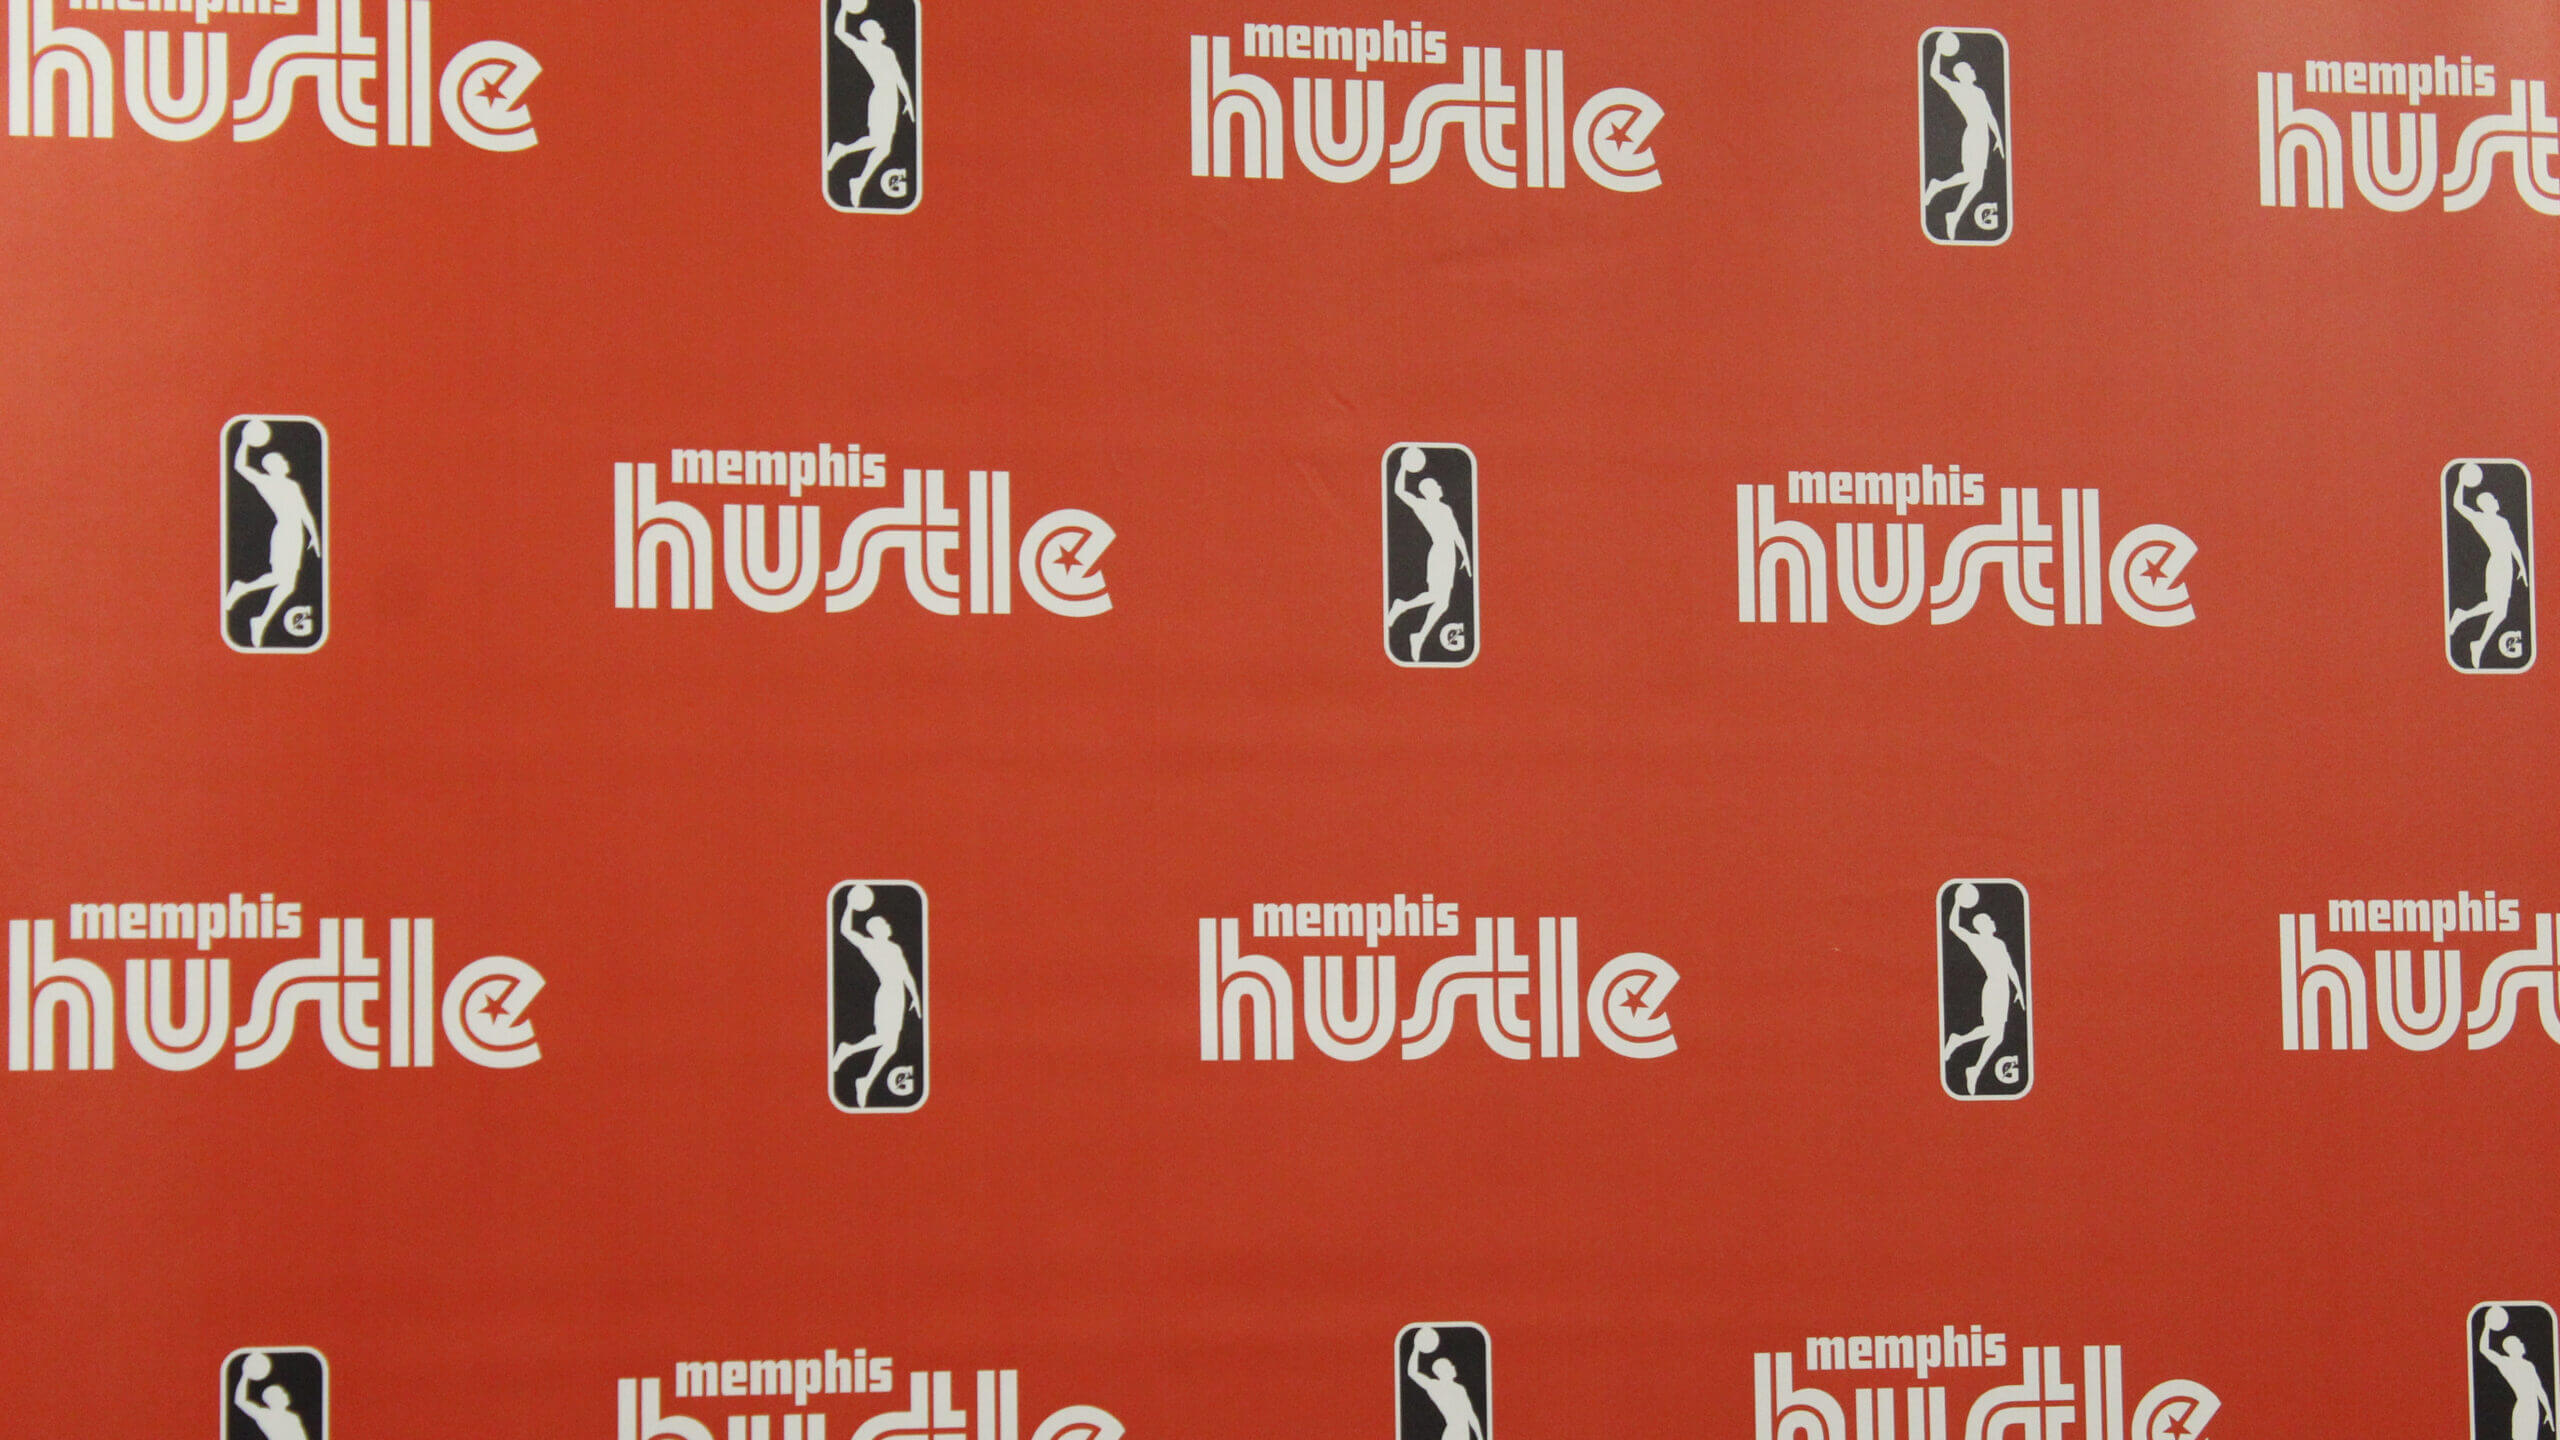 Hustle announces Showcase Cup, regular season schedule